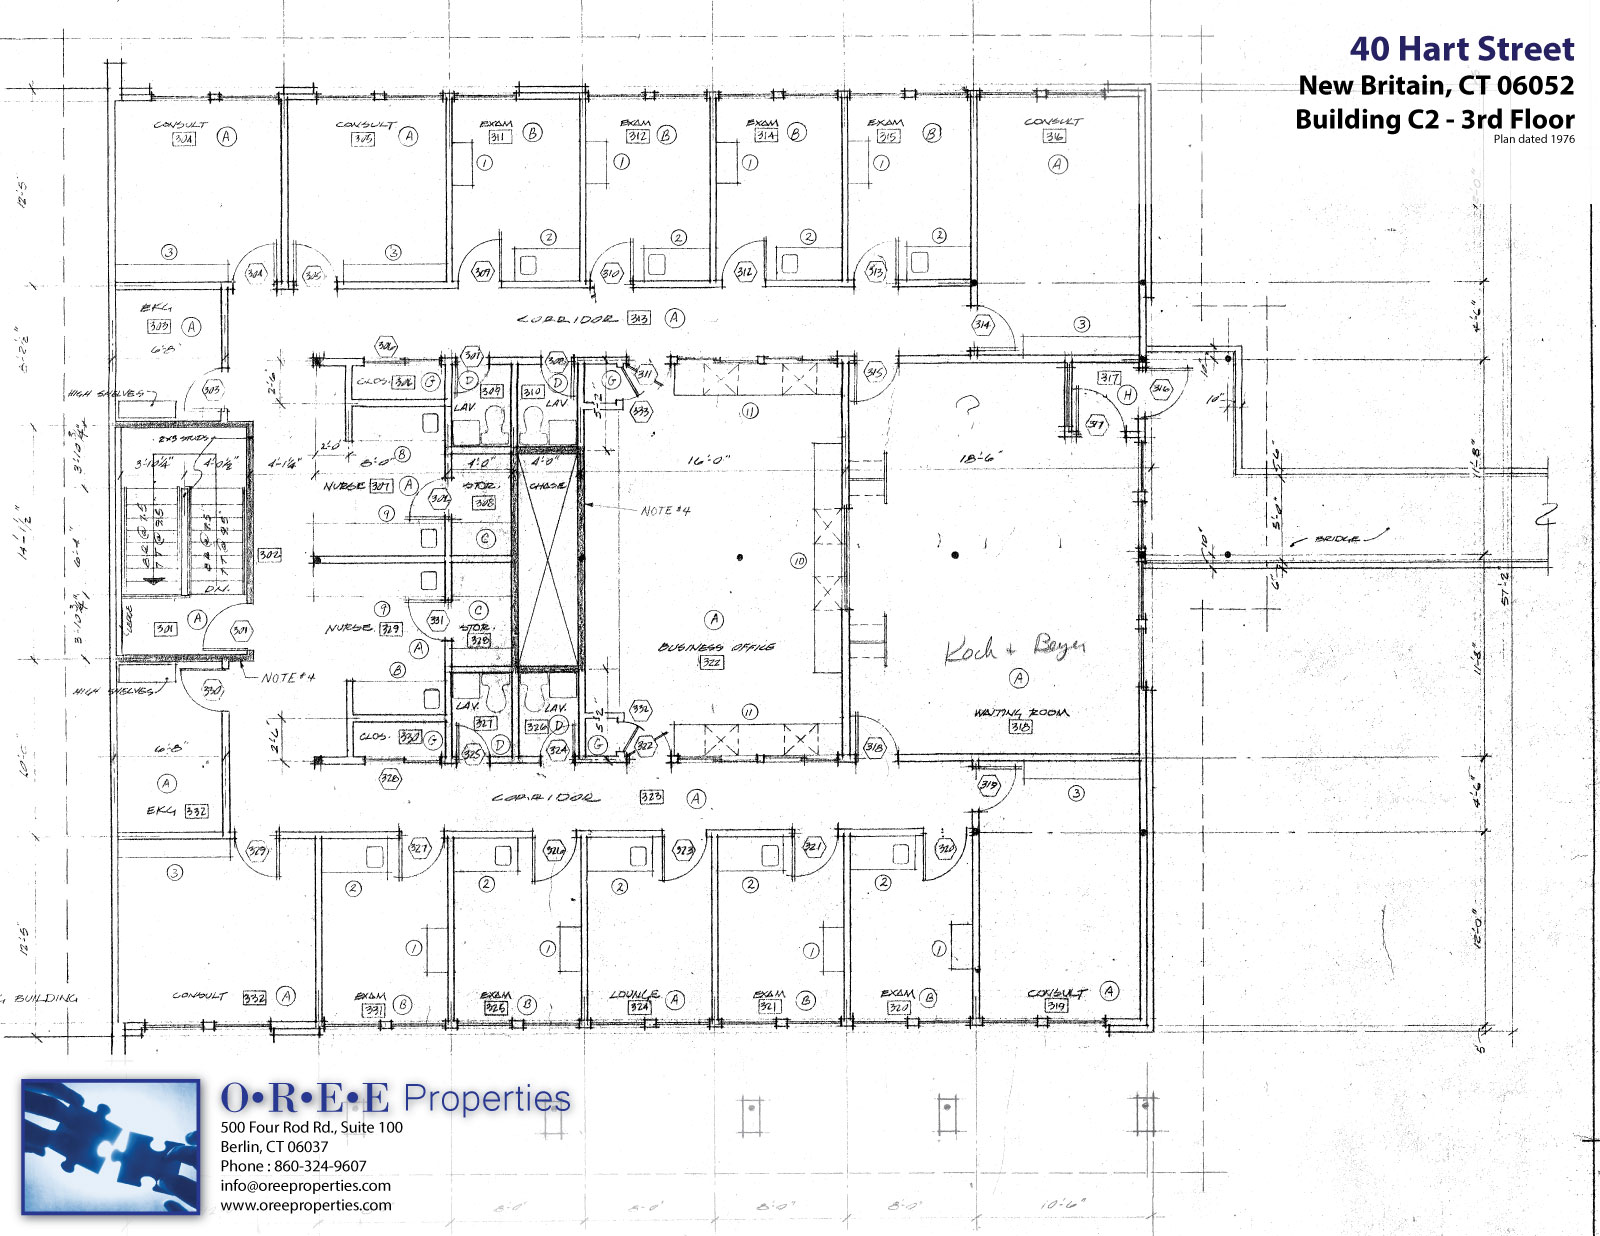 40 Hart St., New Britain, Building C2 - 3rd Floor Plan